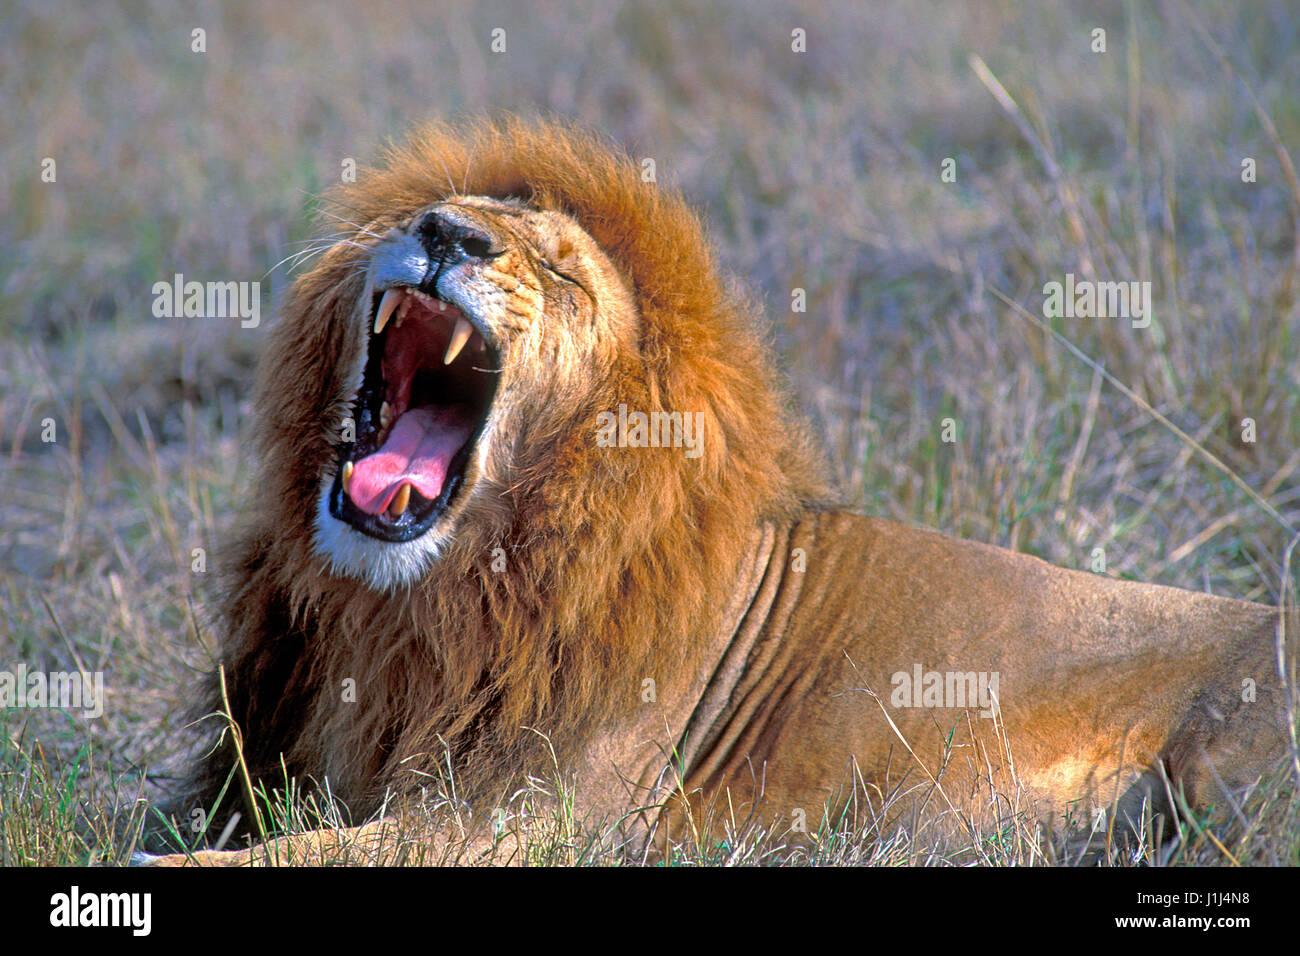 Big African Lion resting in Savannah, yawning portrait, Kenya, Africa Stock Photo